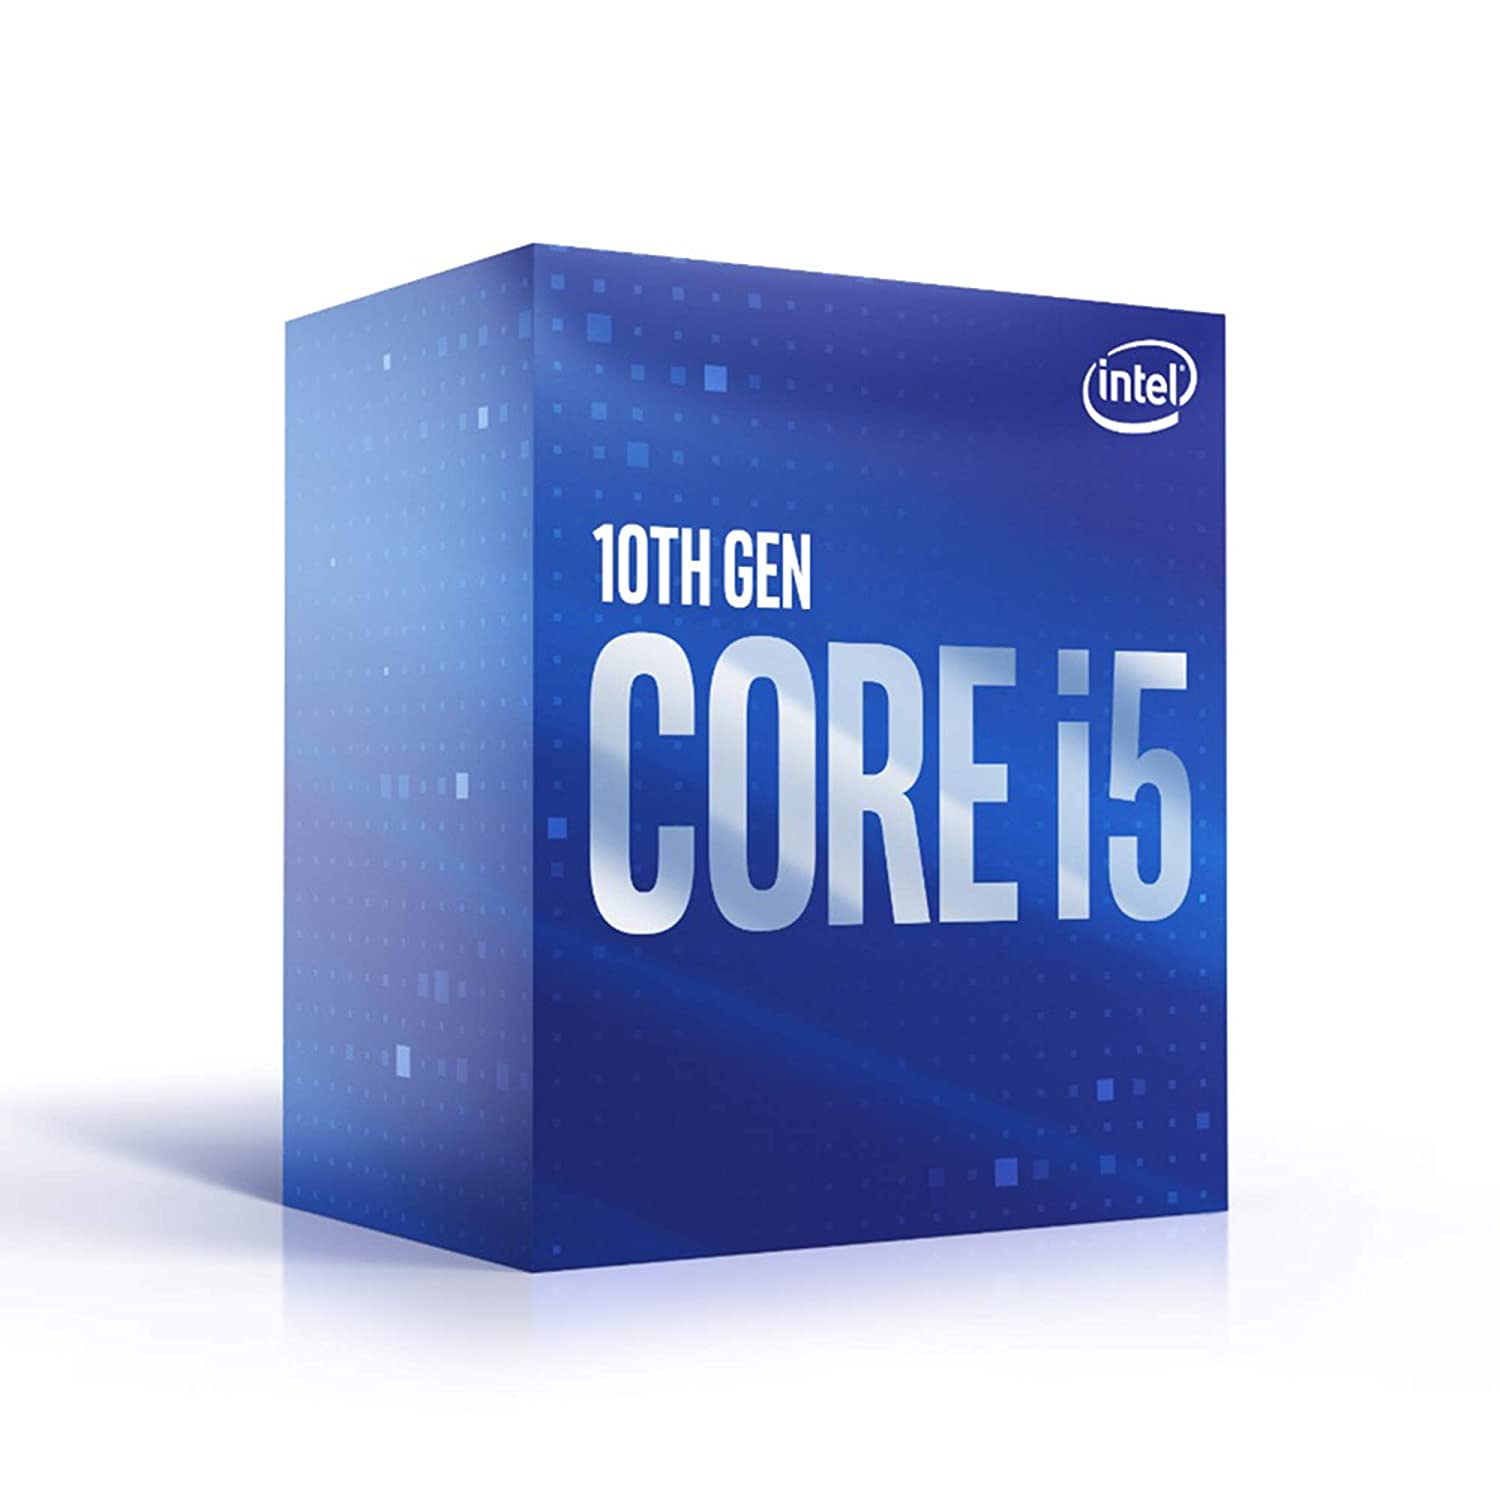 Intel 10th Gen Comet Lake Core i5-10400 Processor